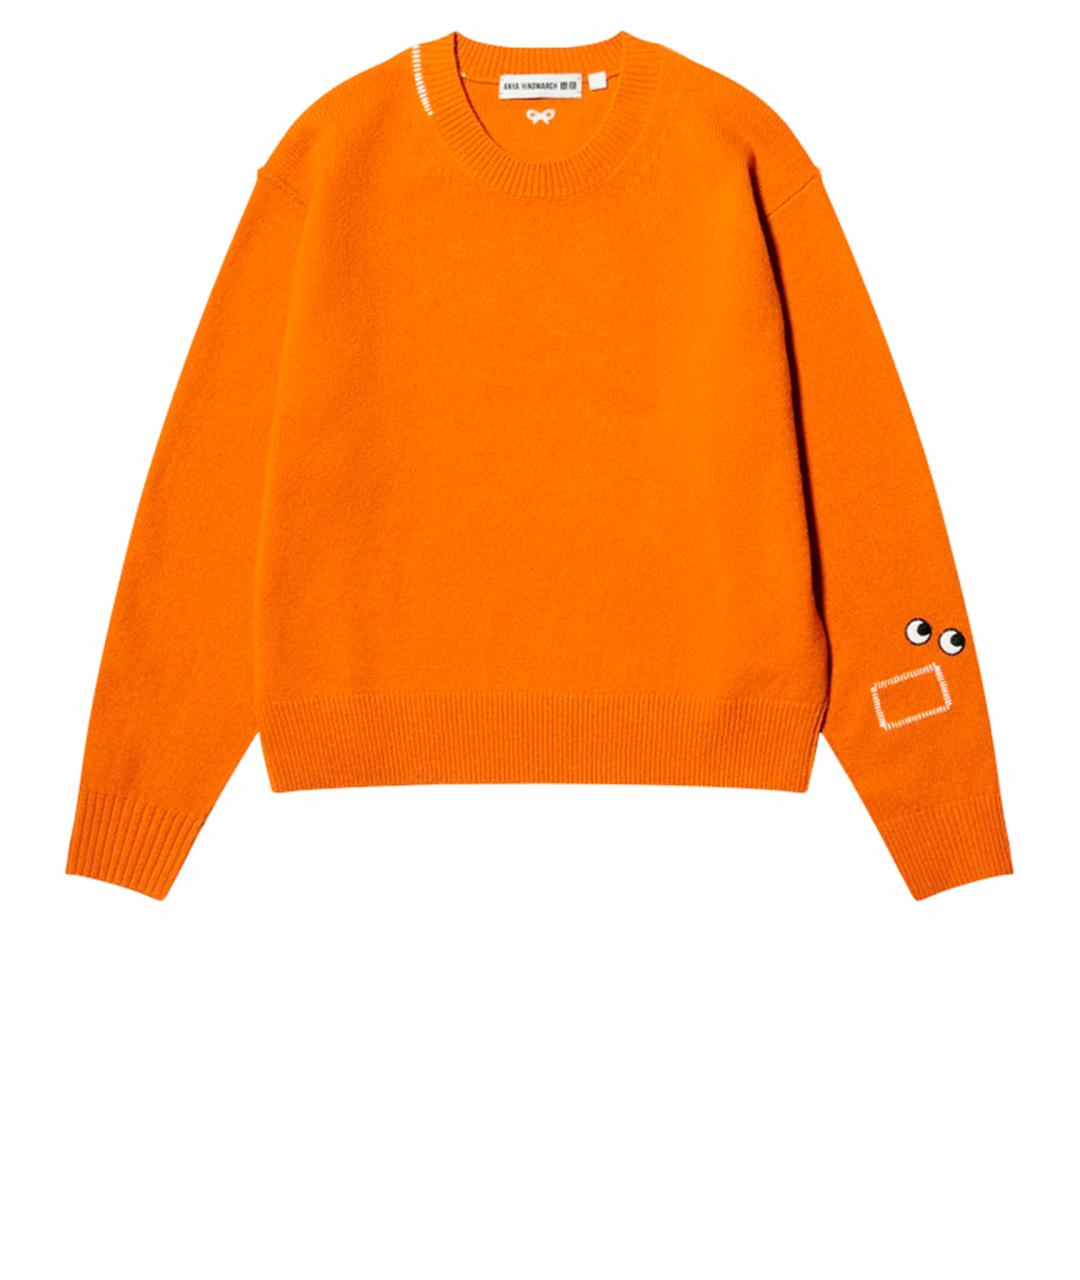 ANYA HINDMARCH Оранжевый шерстяной джемпер / свитер, фото 1